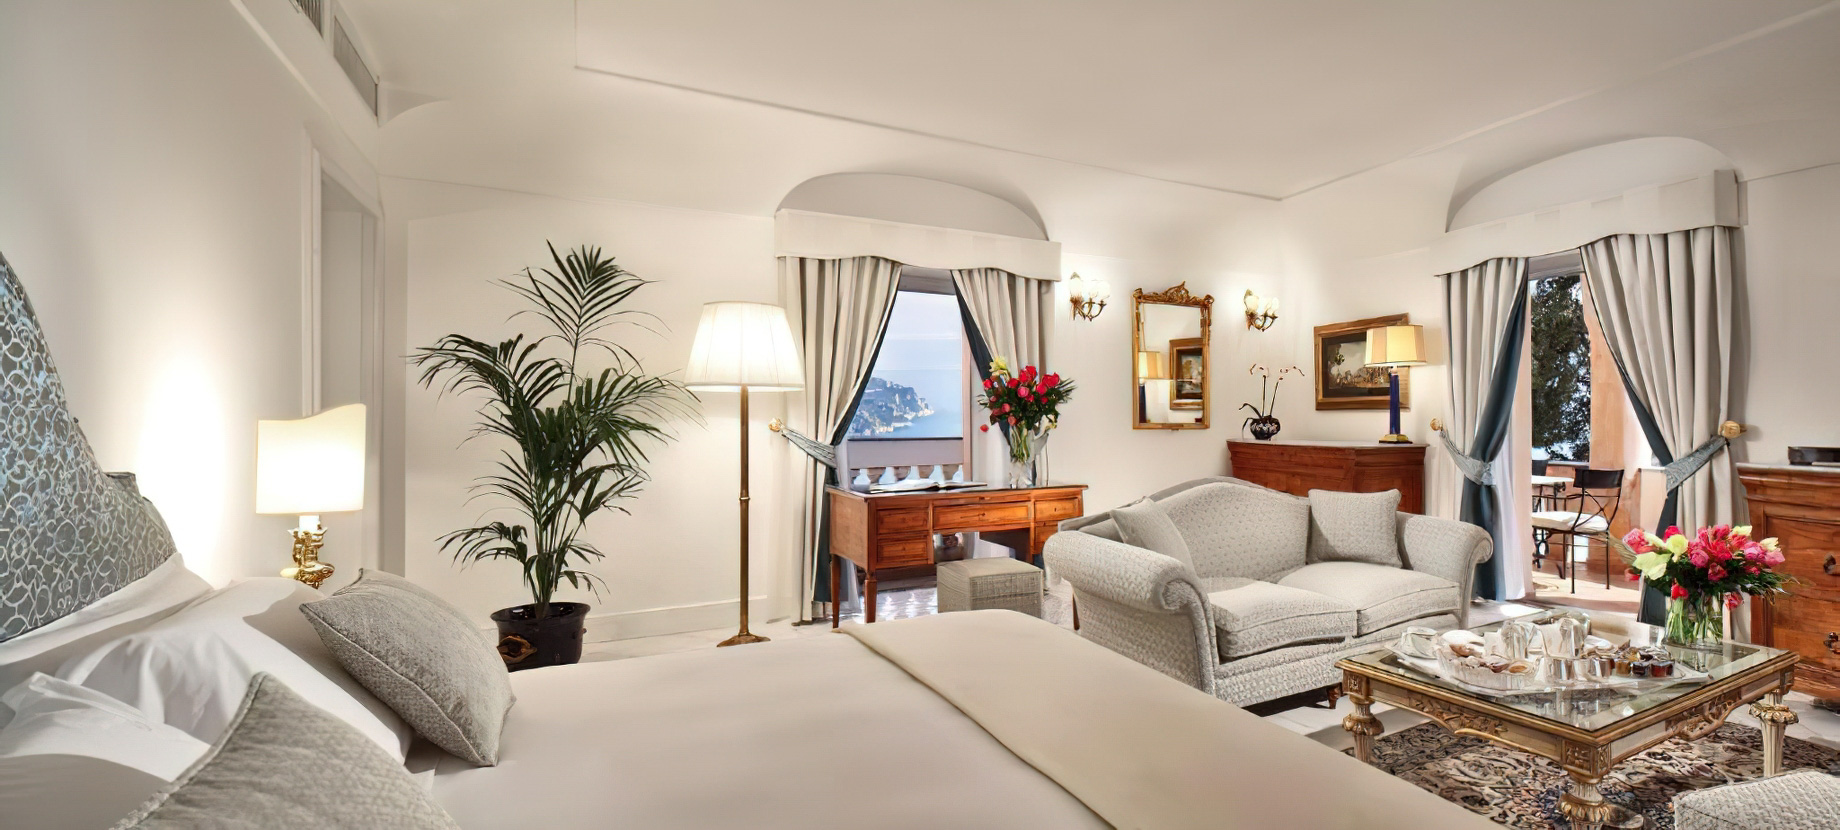 Palazzo Avino Hotel – Amalfi Coast, Ravello, Italy – Deluxe Suite with Sea View and Terrace